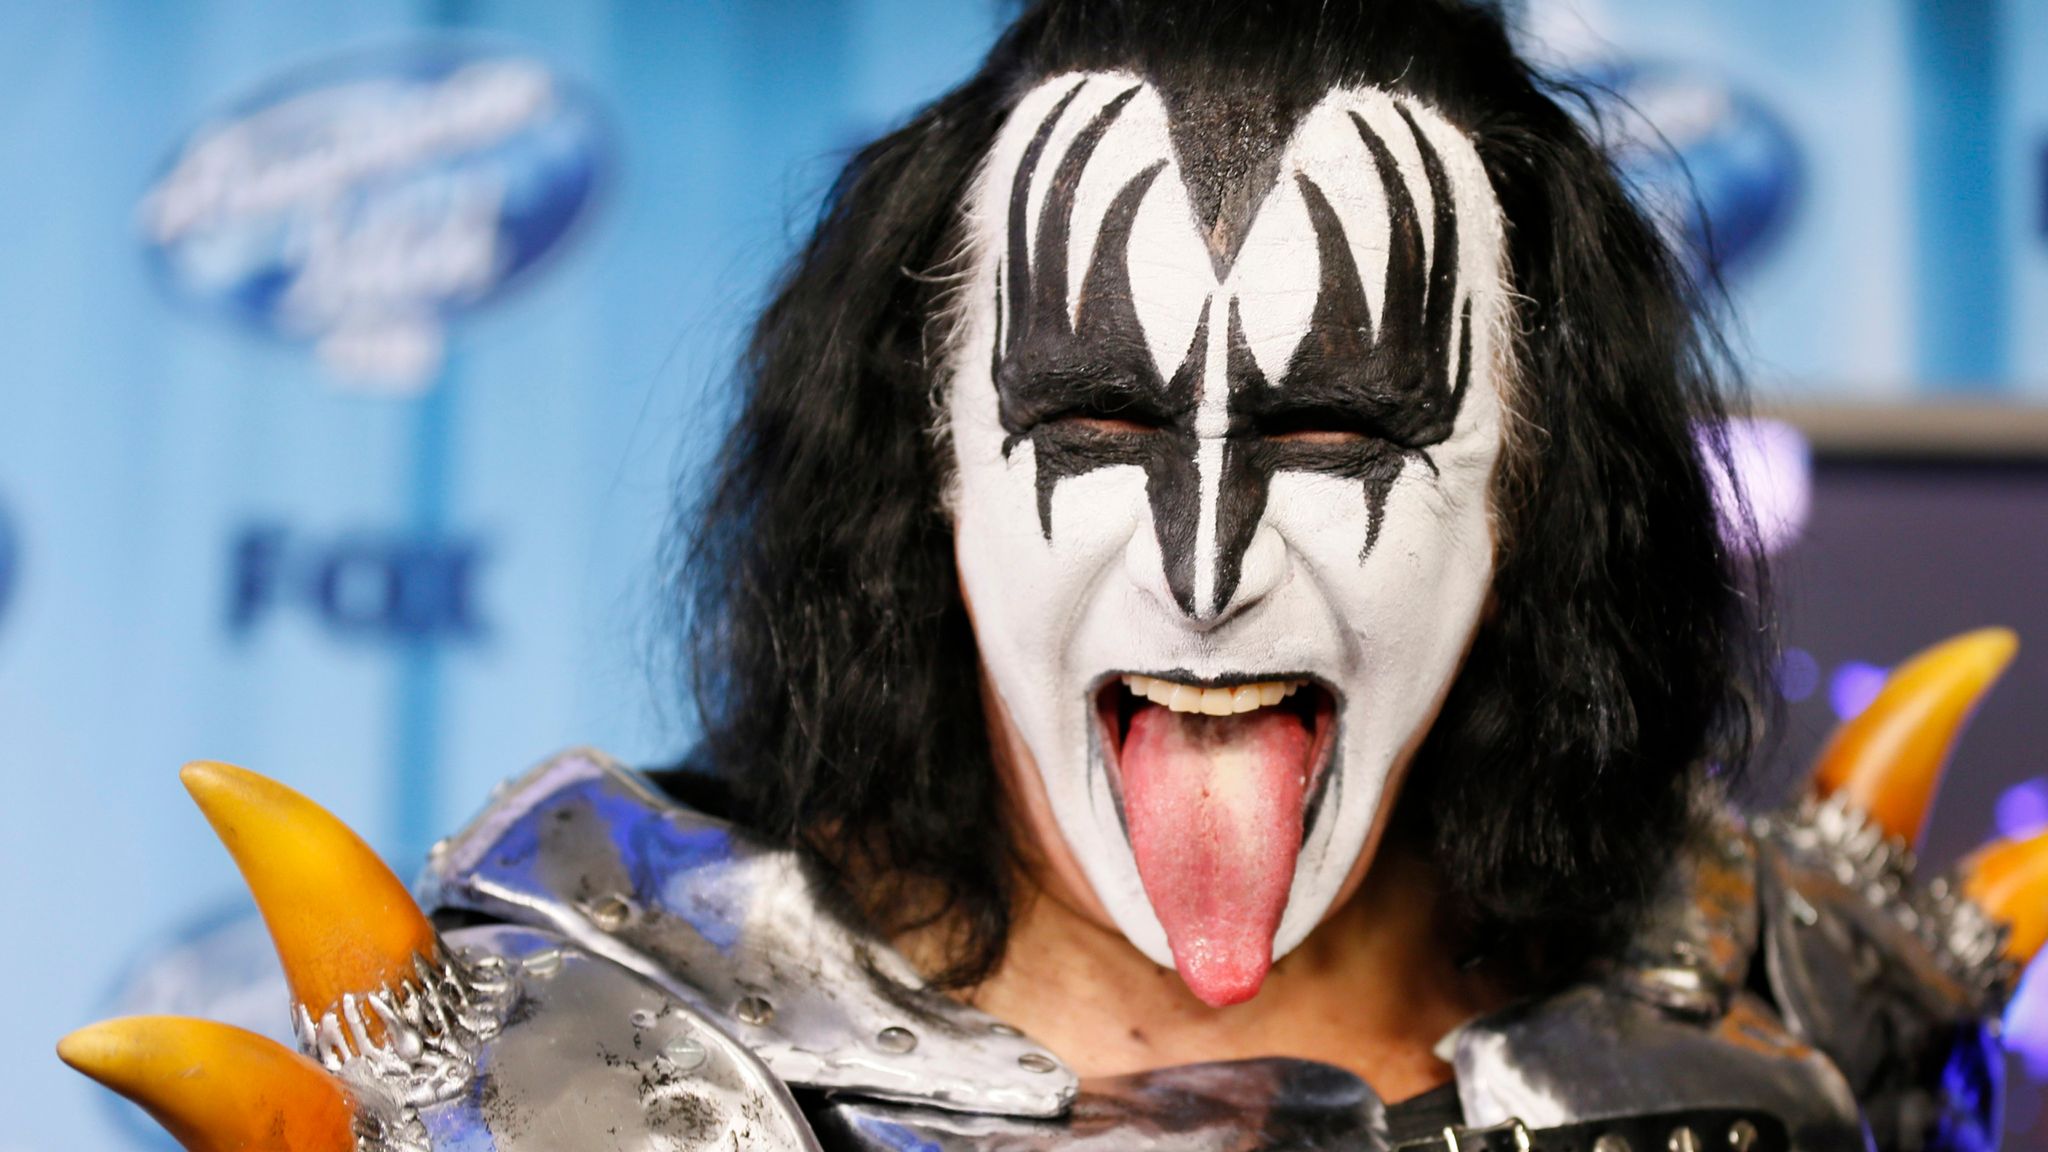 Kiss star Gene Simmons rocks up to parliament for PMQs | Politics News Sky News